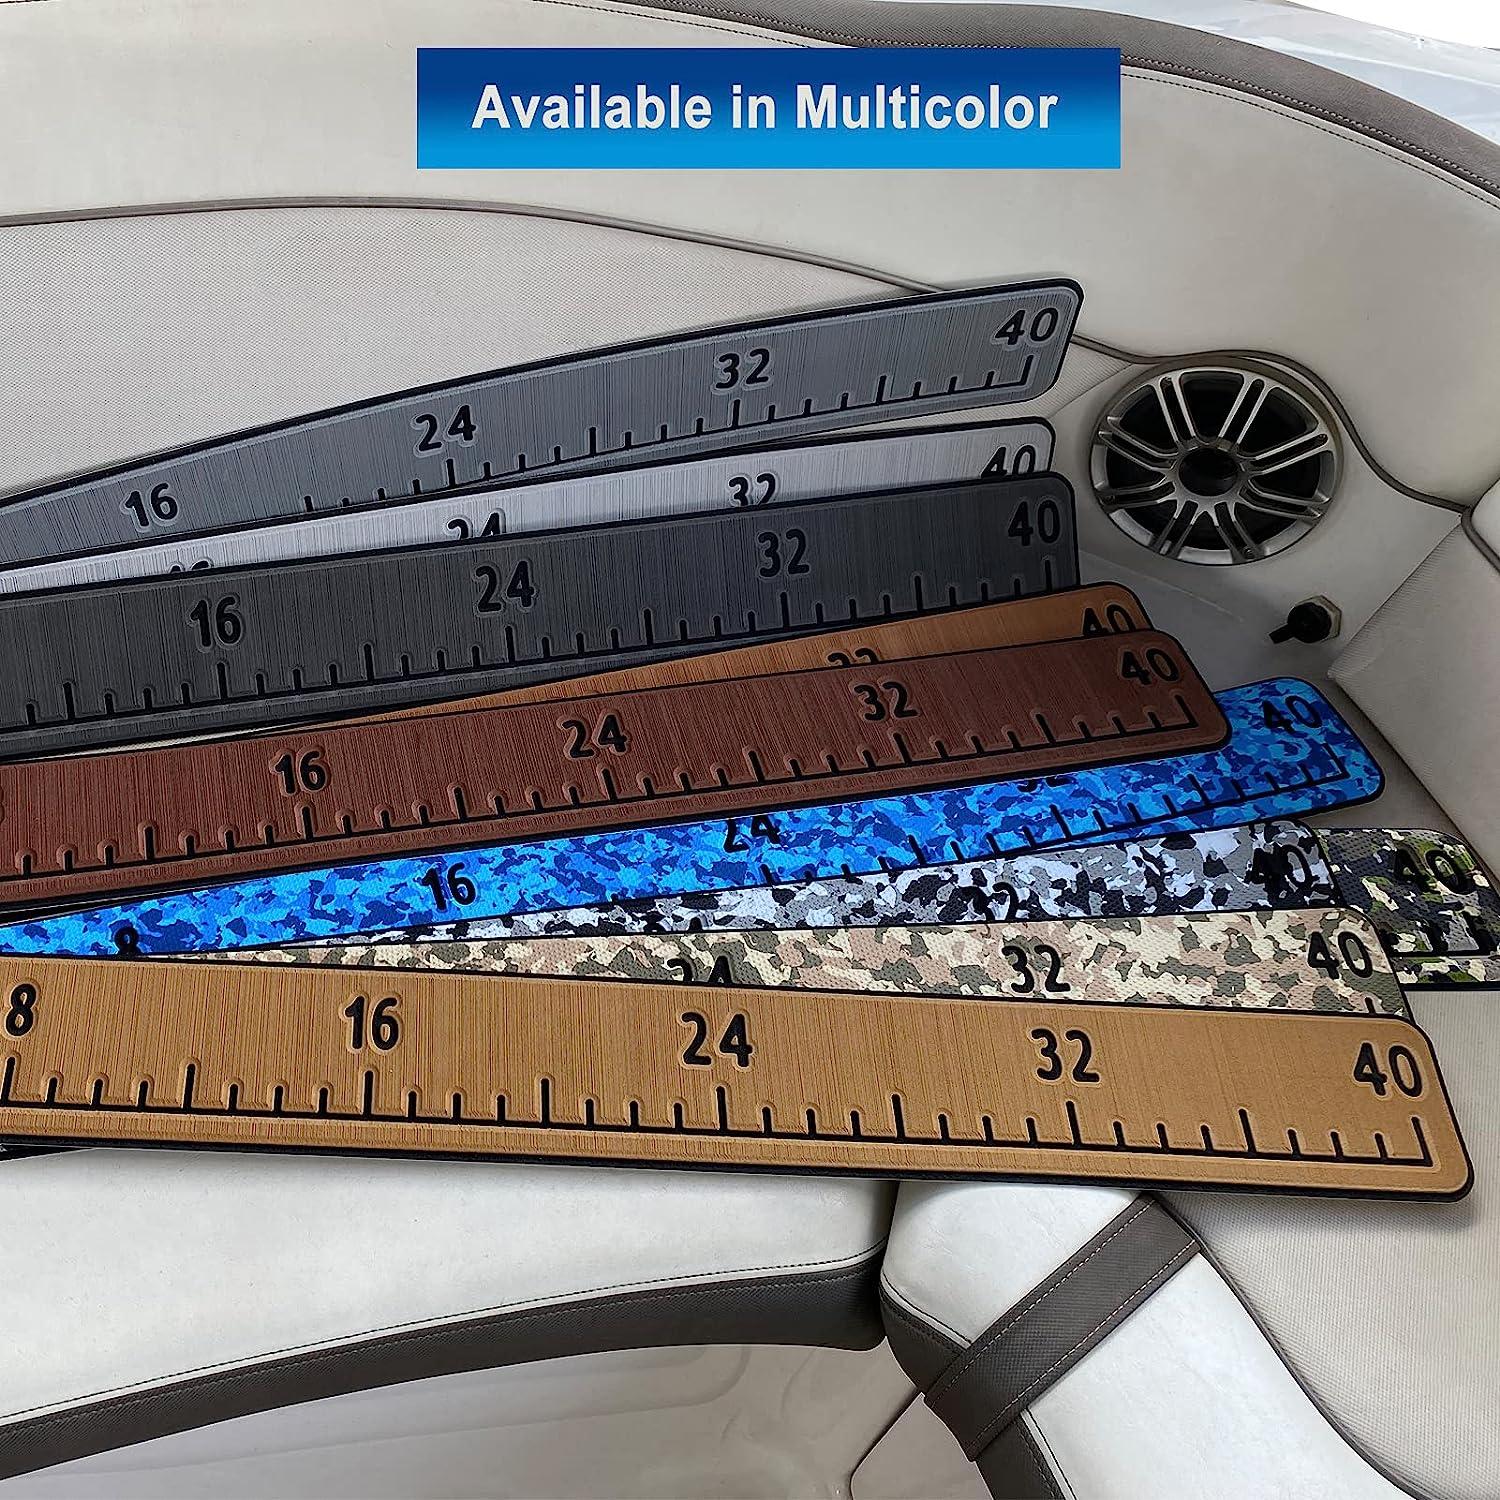 Measuring Sticker Fish Ruler - Transparent - Self Adhesive Tape